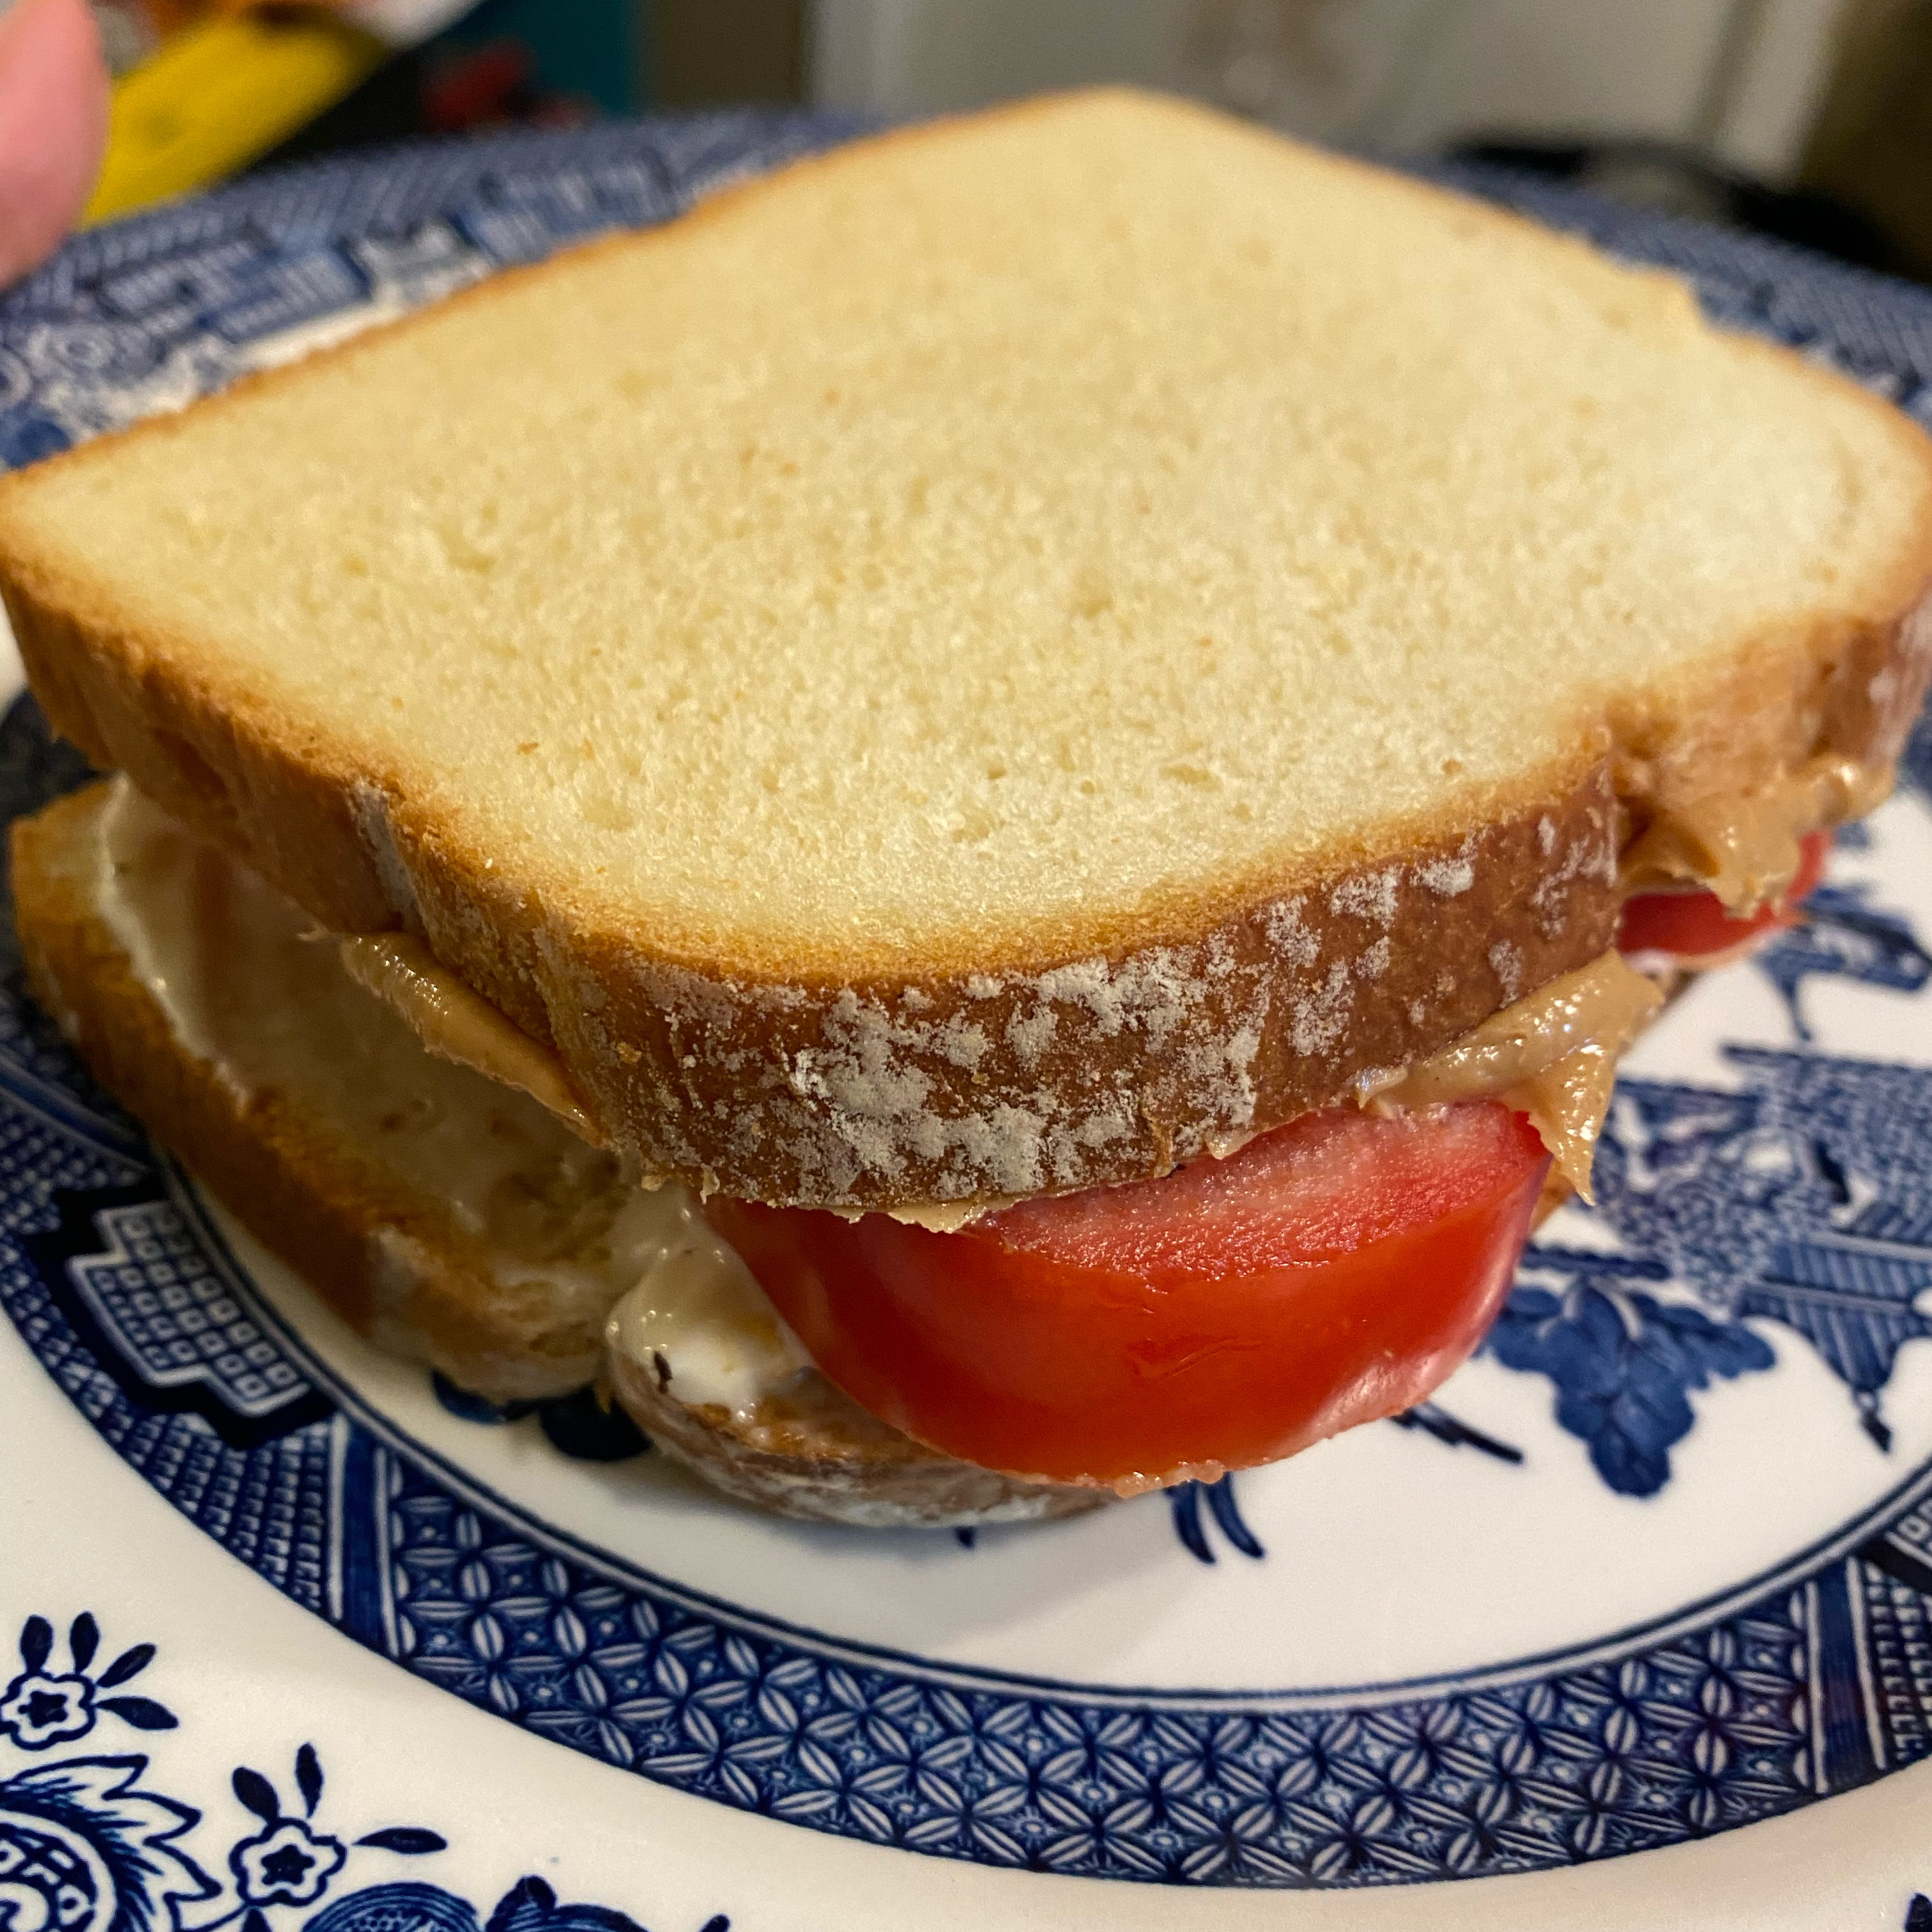 Simple Peanut Butter and Tomato Sandwich Sharon Poliarco Van Fleet